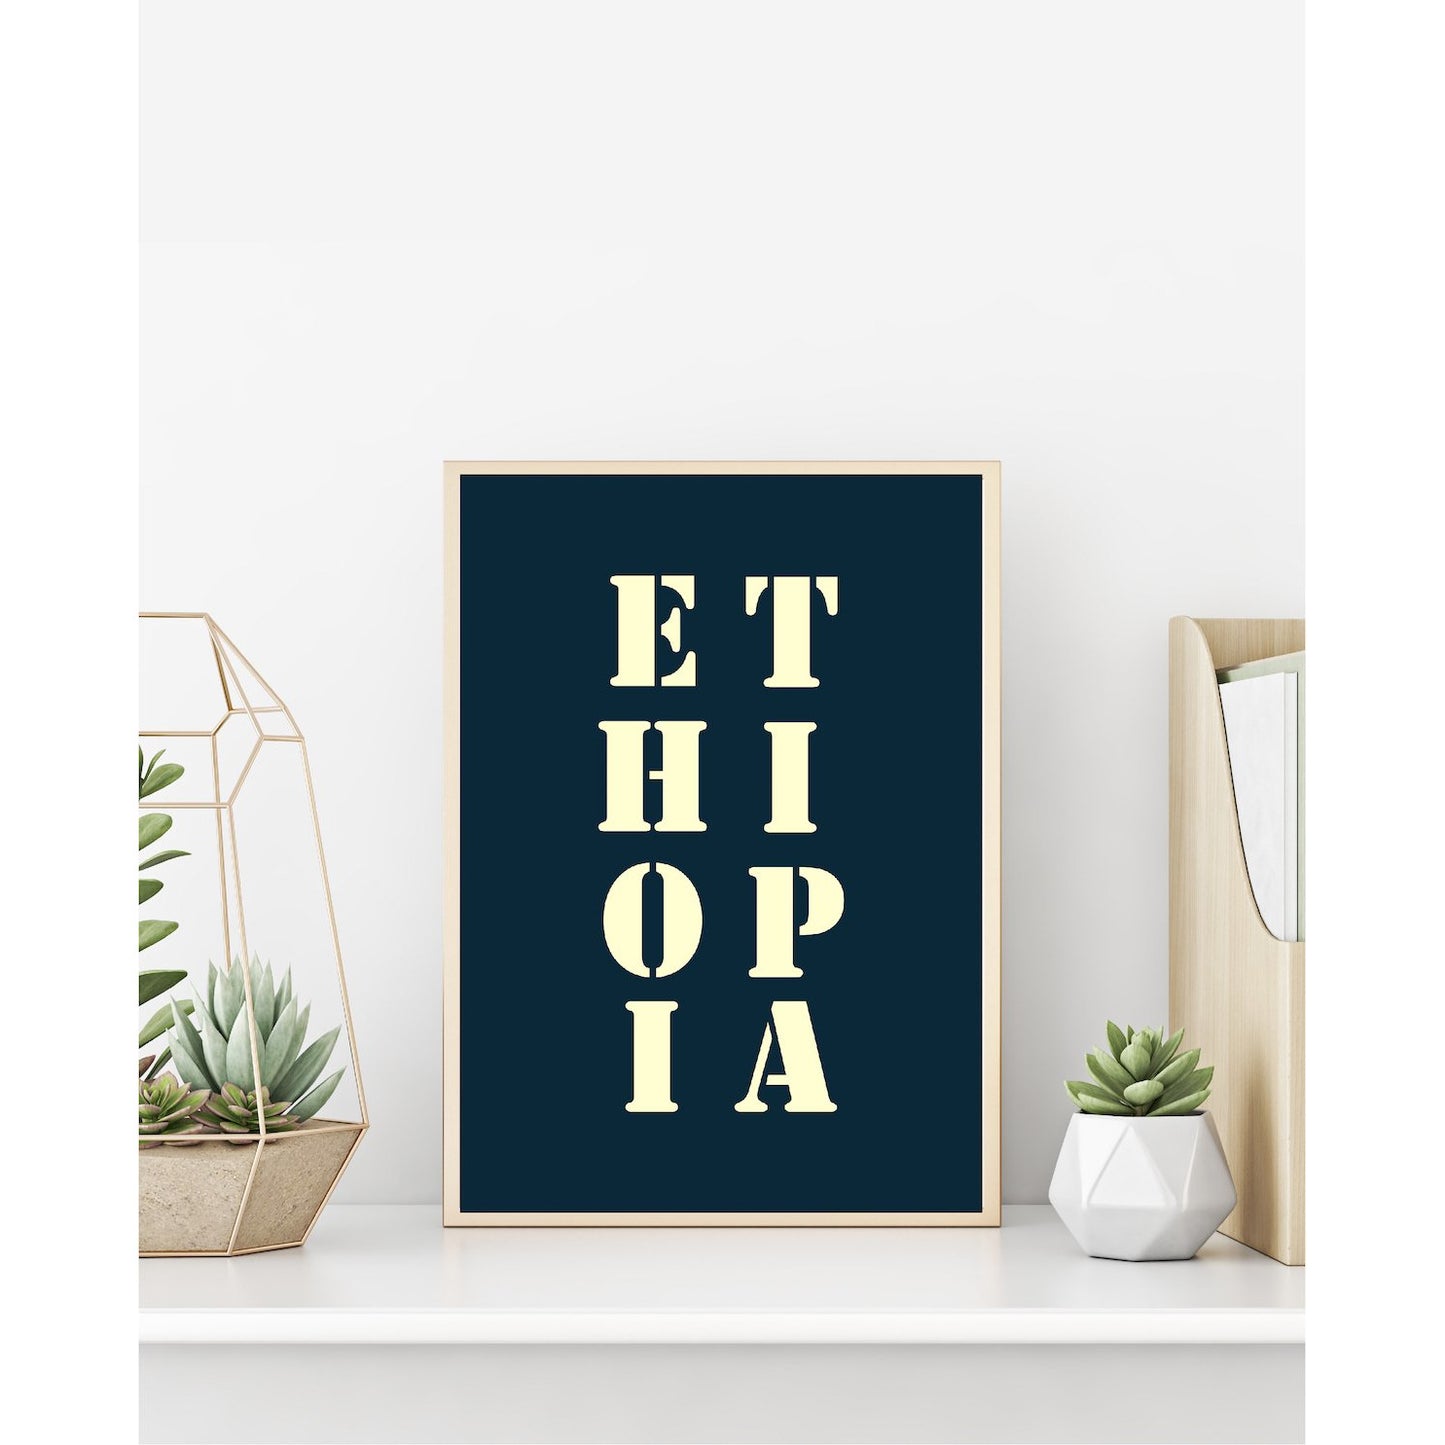 "Ethiopia" poster